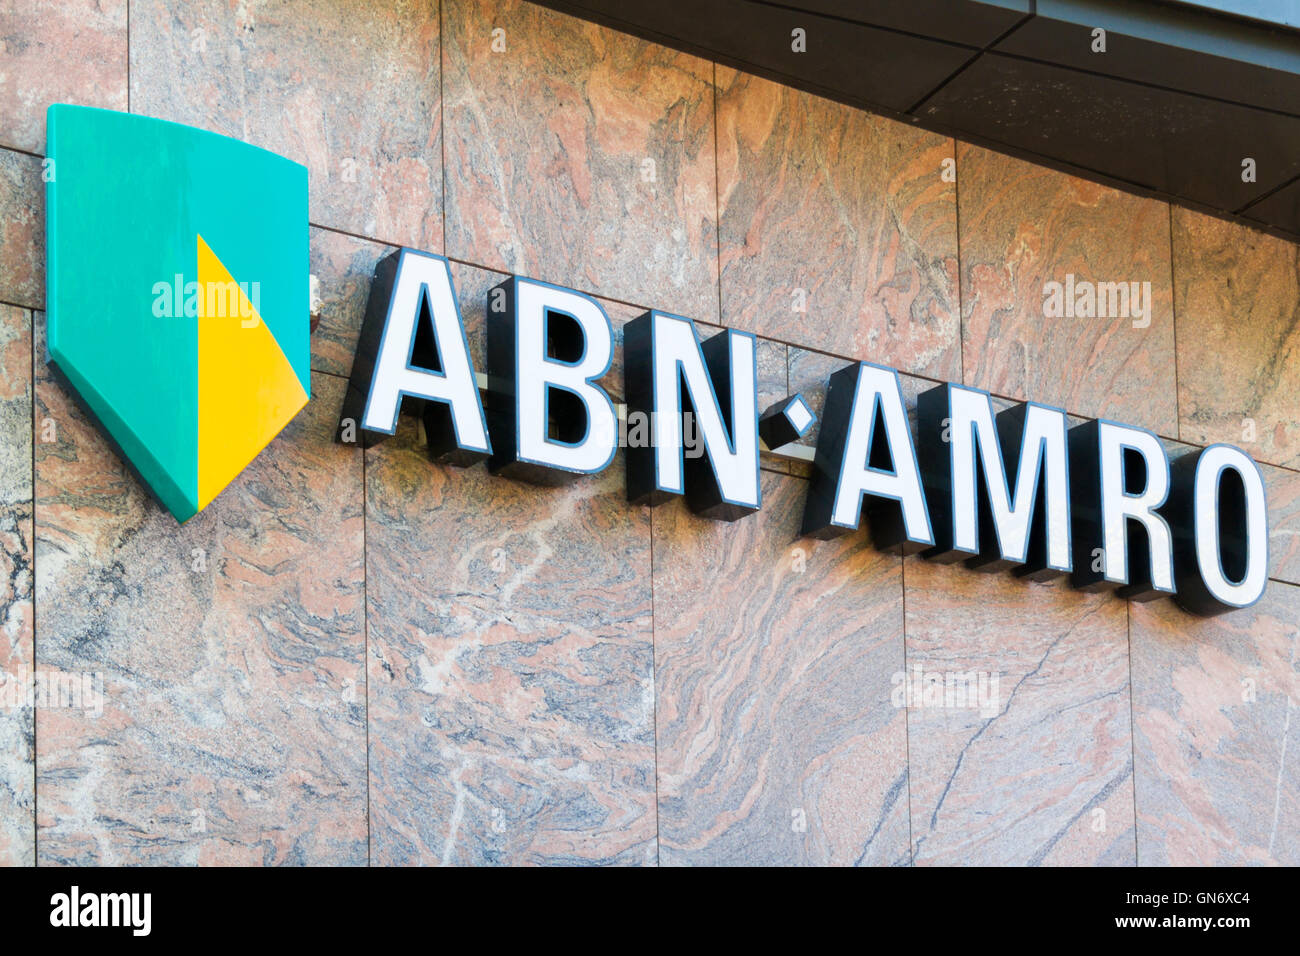 Brand name logo ABN AMRO bank on local branch office in Alkmaar Stock ...